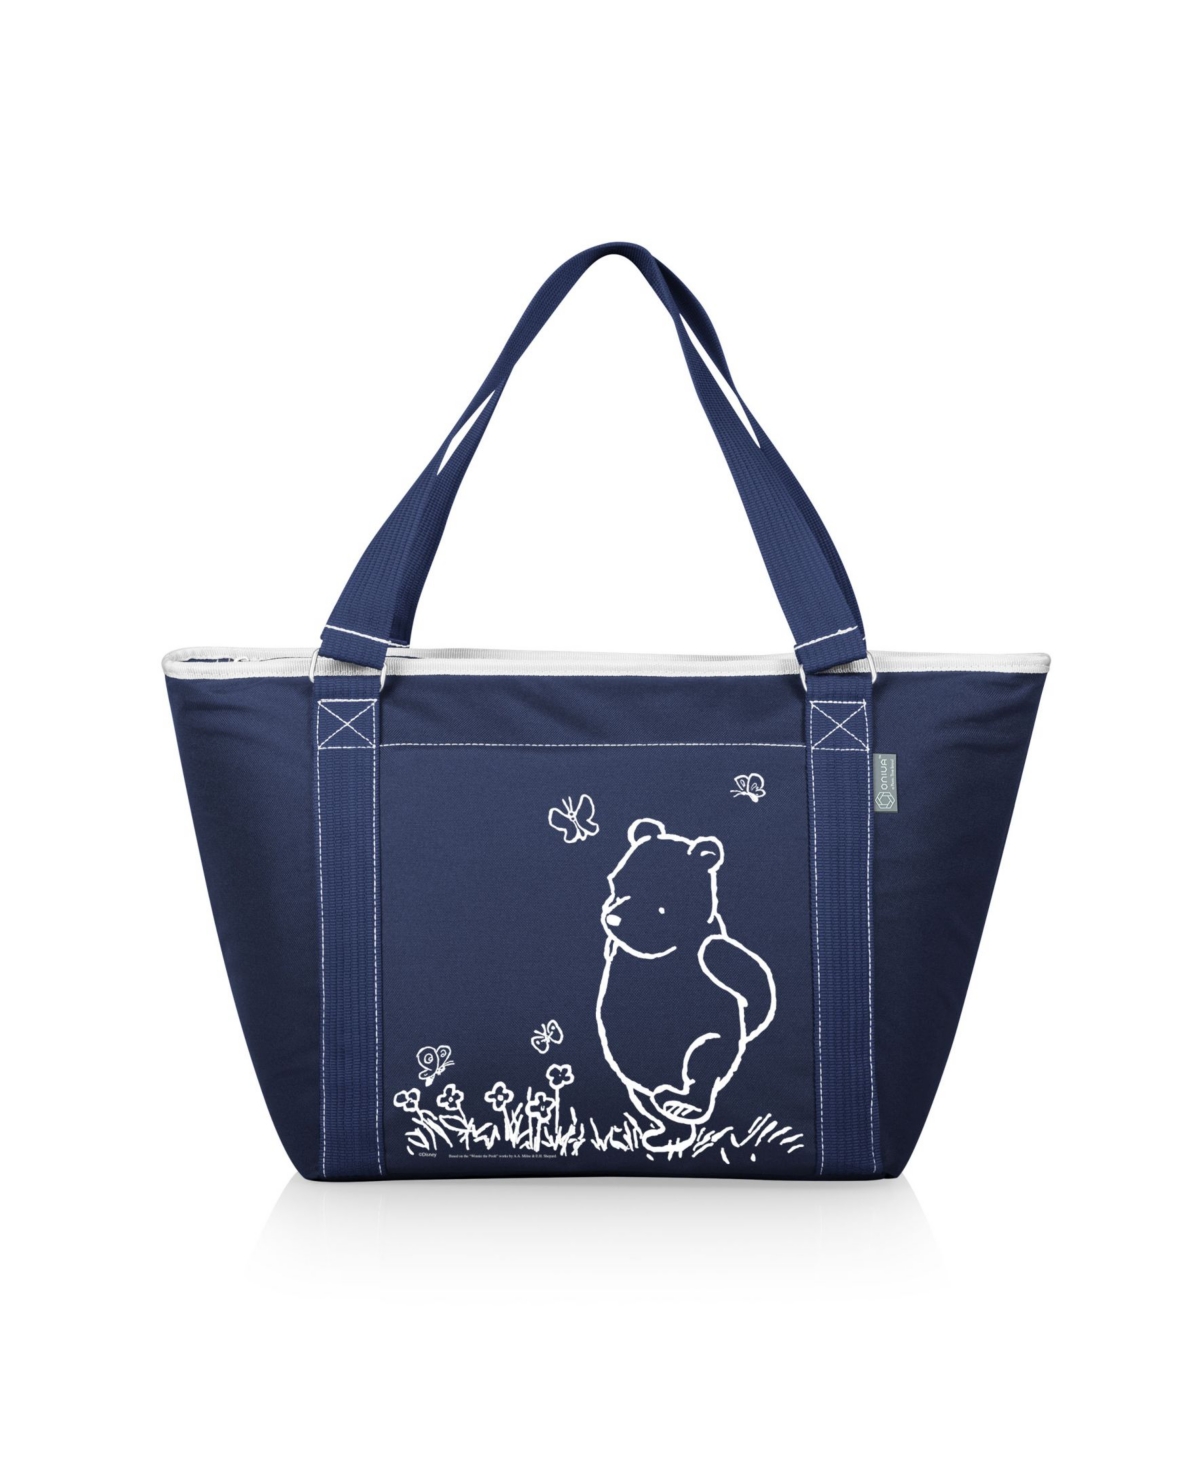 Oniva Disney's Winnie The Pooh Topanga Cooler Tote Bag - Navy